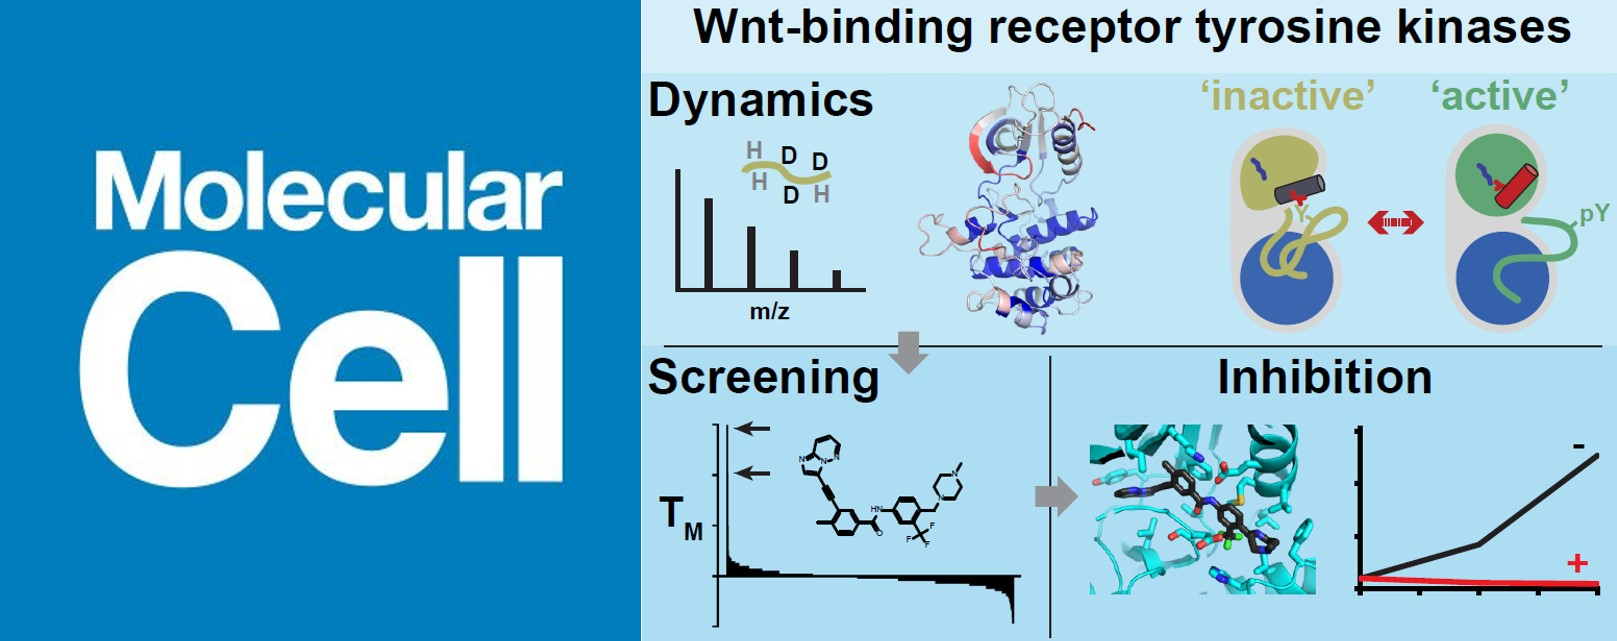 Molecular Cell - Wnt-binding receptor tyrosine kinases